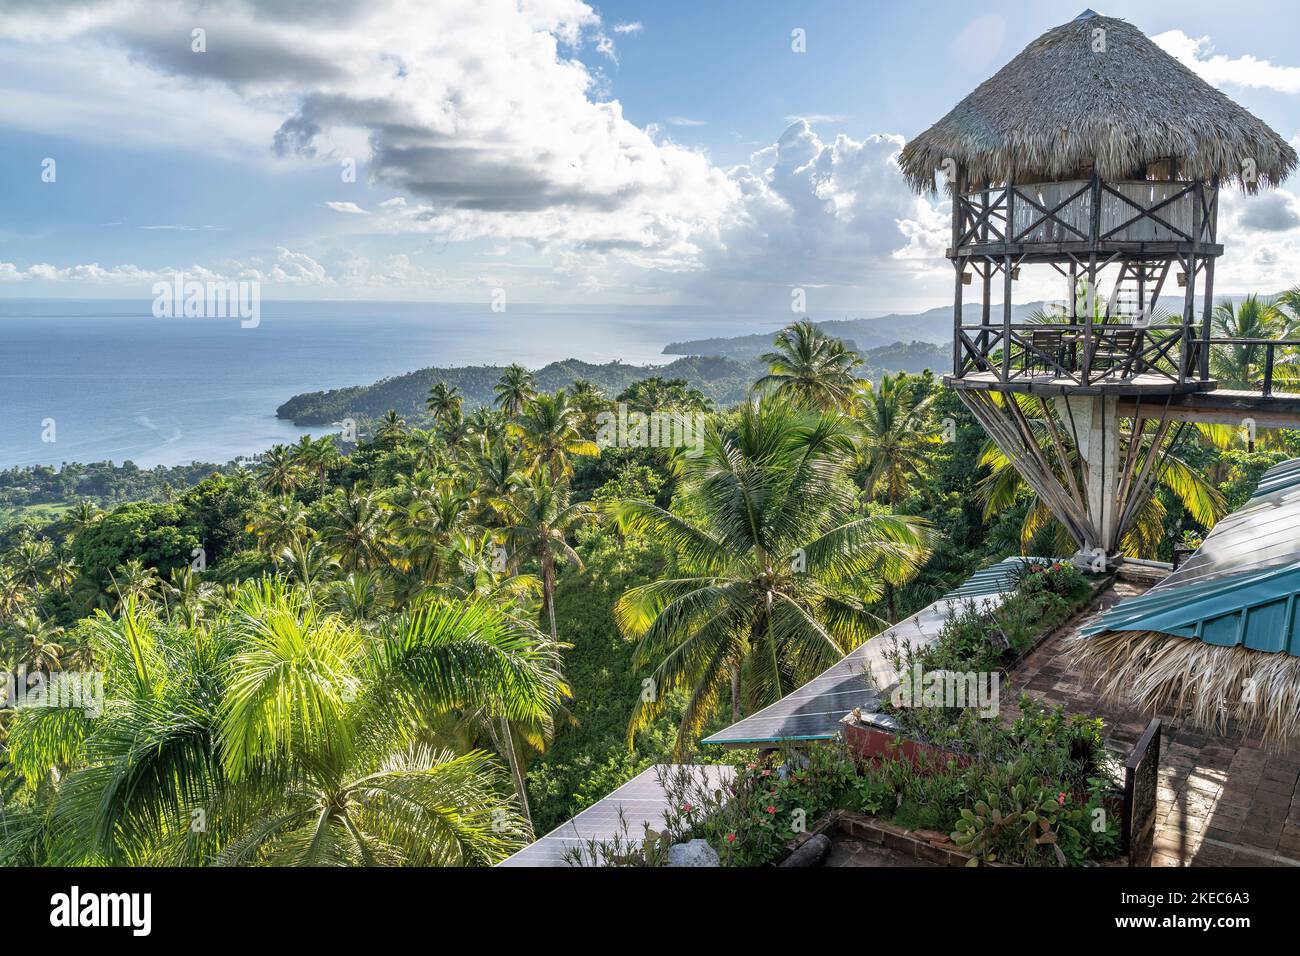 North America, Caribbean, Greater Antilles, Hispaniola Island, Dominican Republic, Sama, View from Boutique Hotel Hacienda Cocuyo over Sama Bay Stock Photo